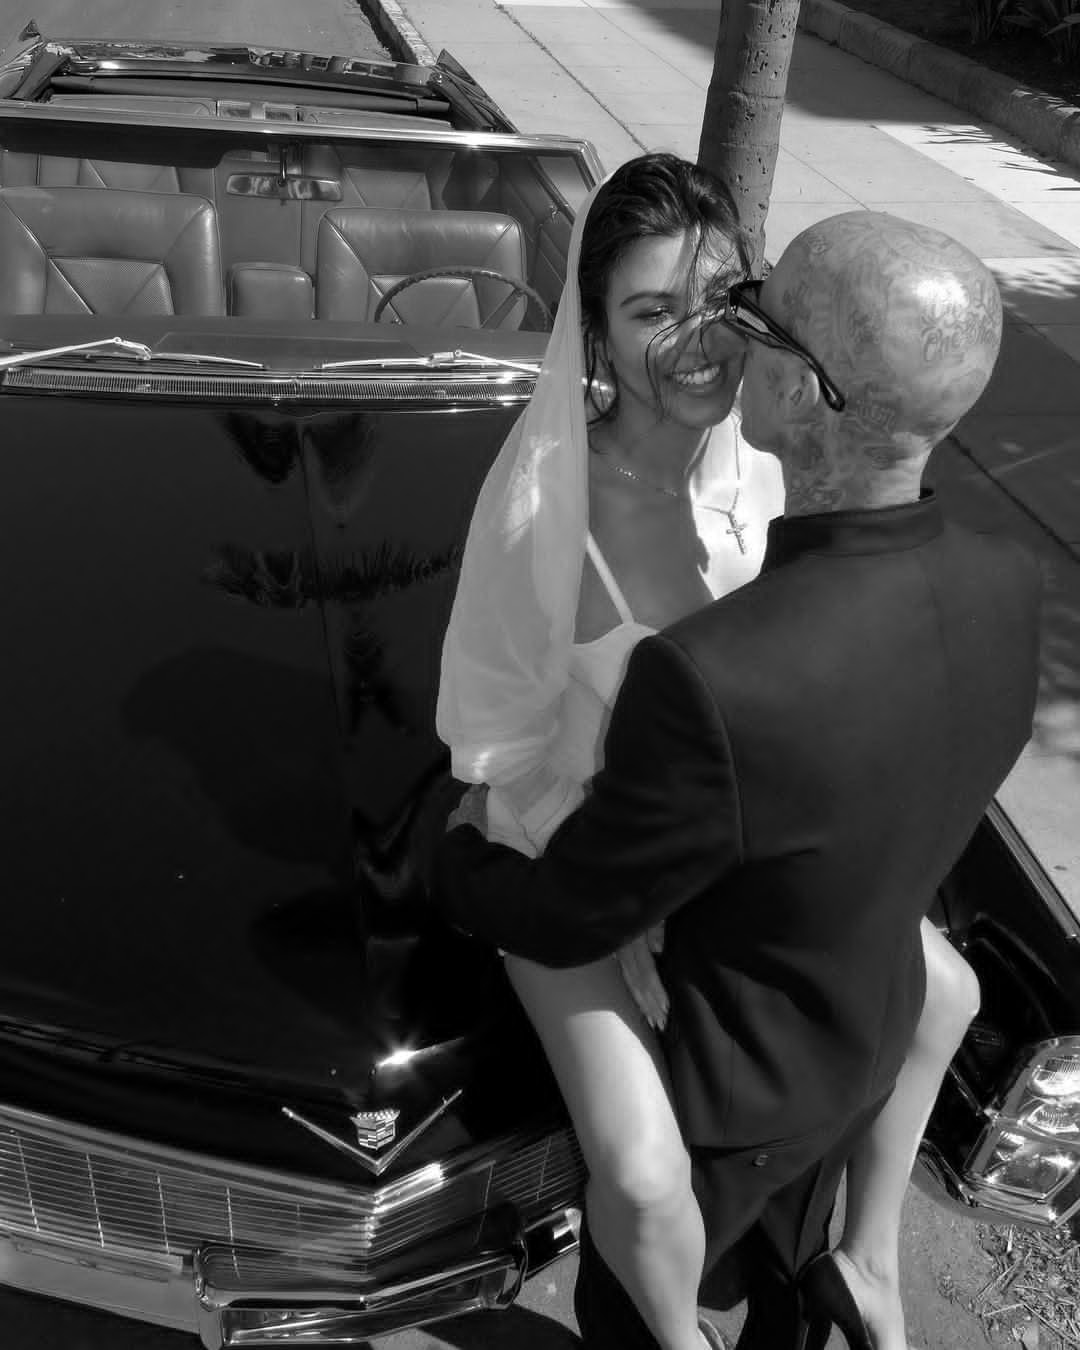 Till death do us part - Travis Barker and Kourtney Kardashian share photos from their wedding